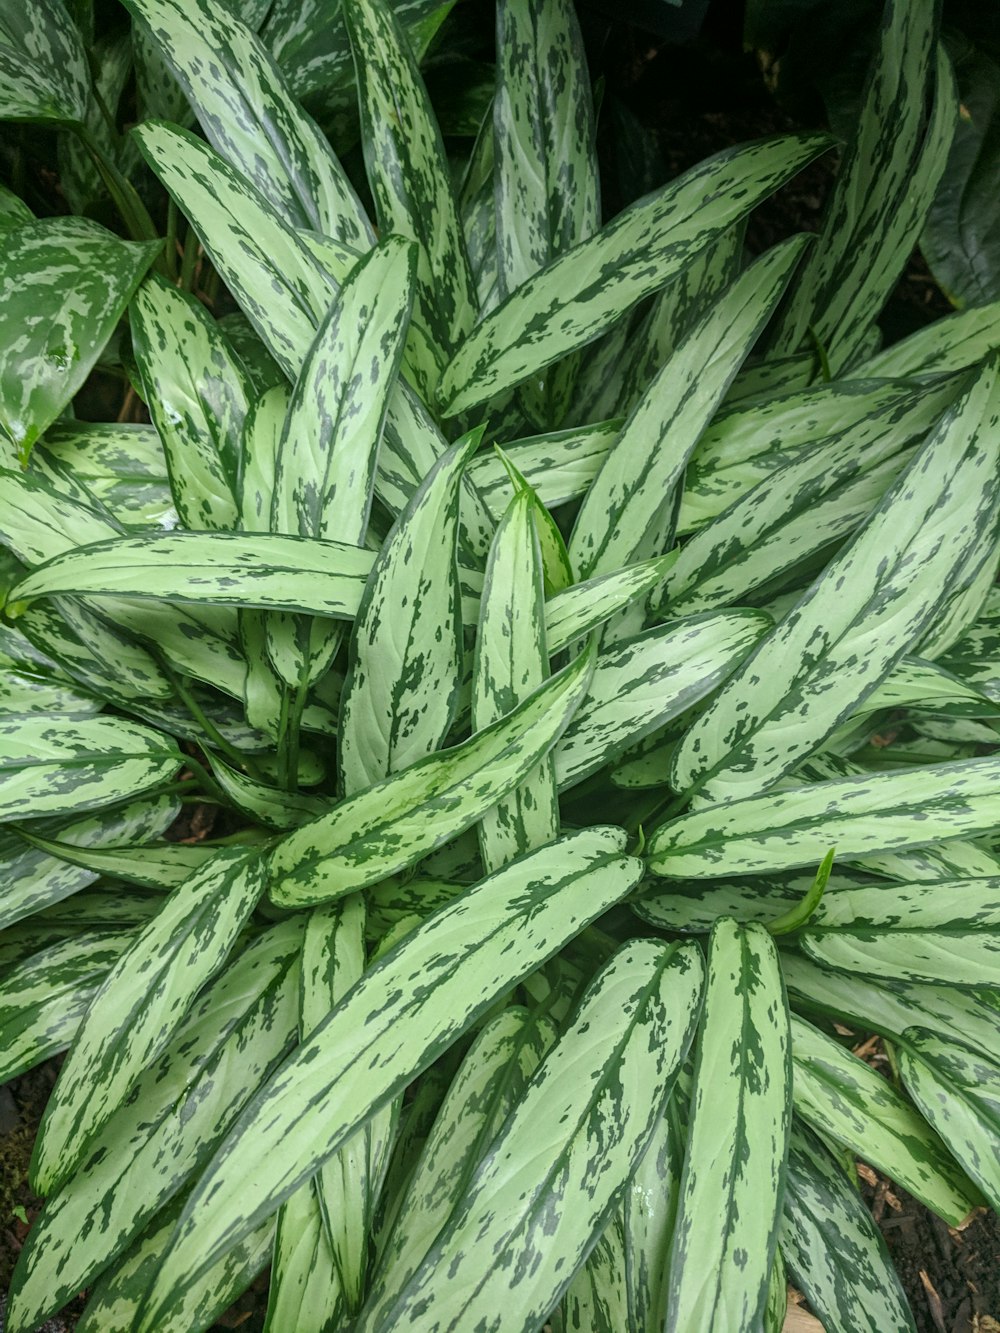 Grüne Pflanze